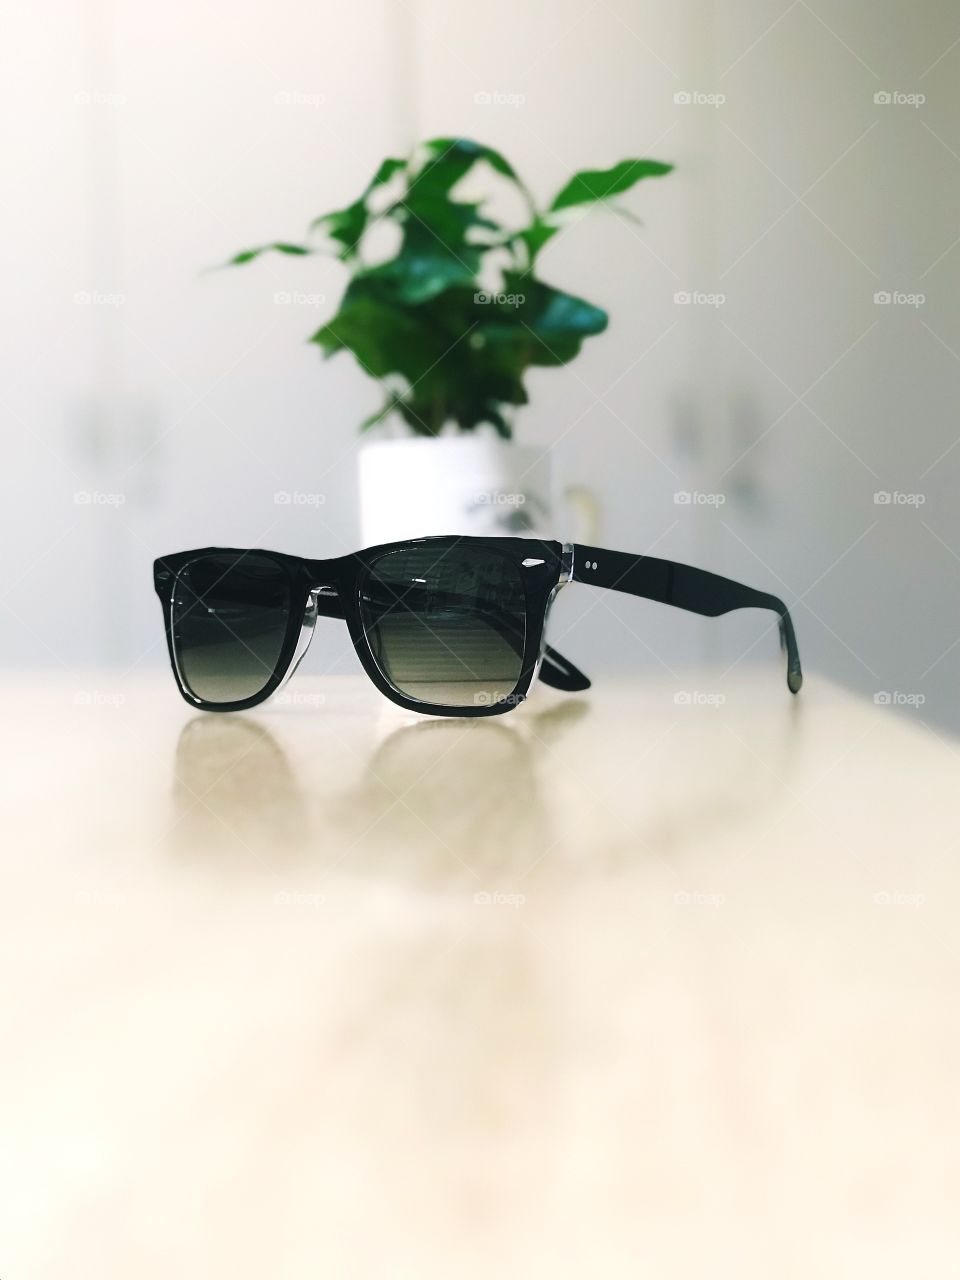 New sunglasses 